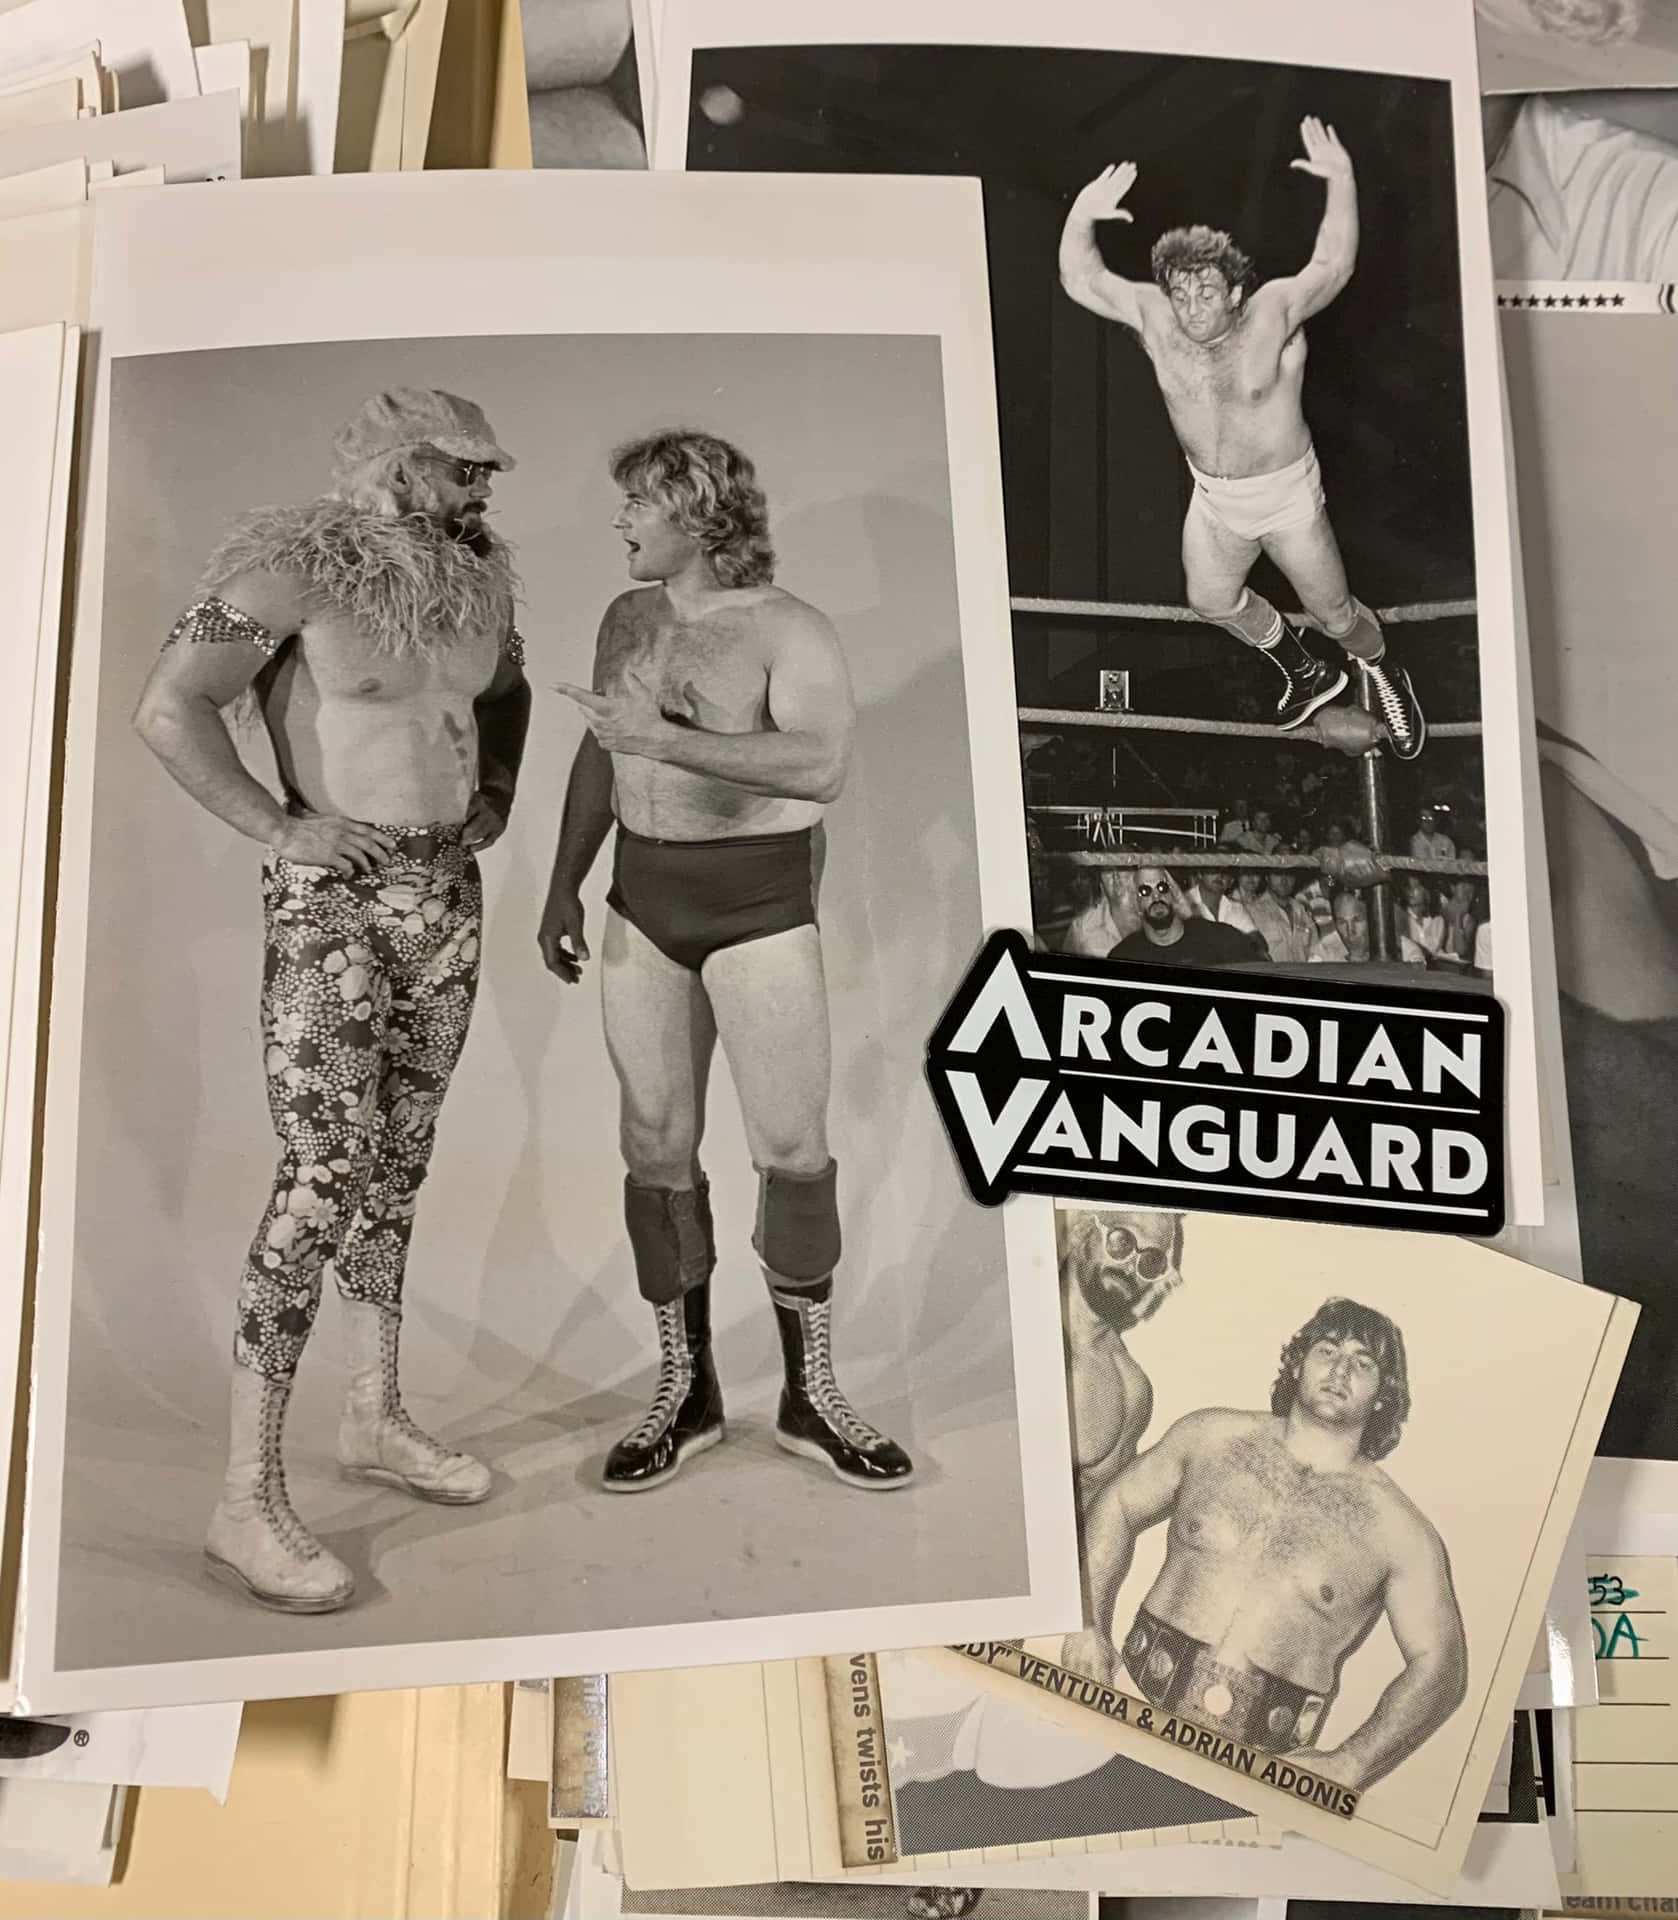 Amerikansk professionel bryder Adrian Adonis med Jesse Ventura AWA. Wallpaper